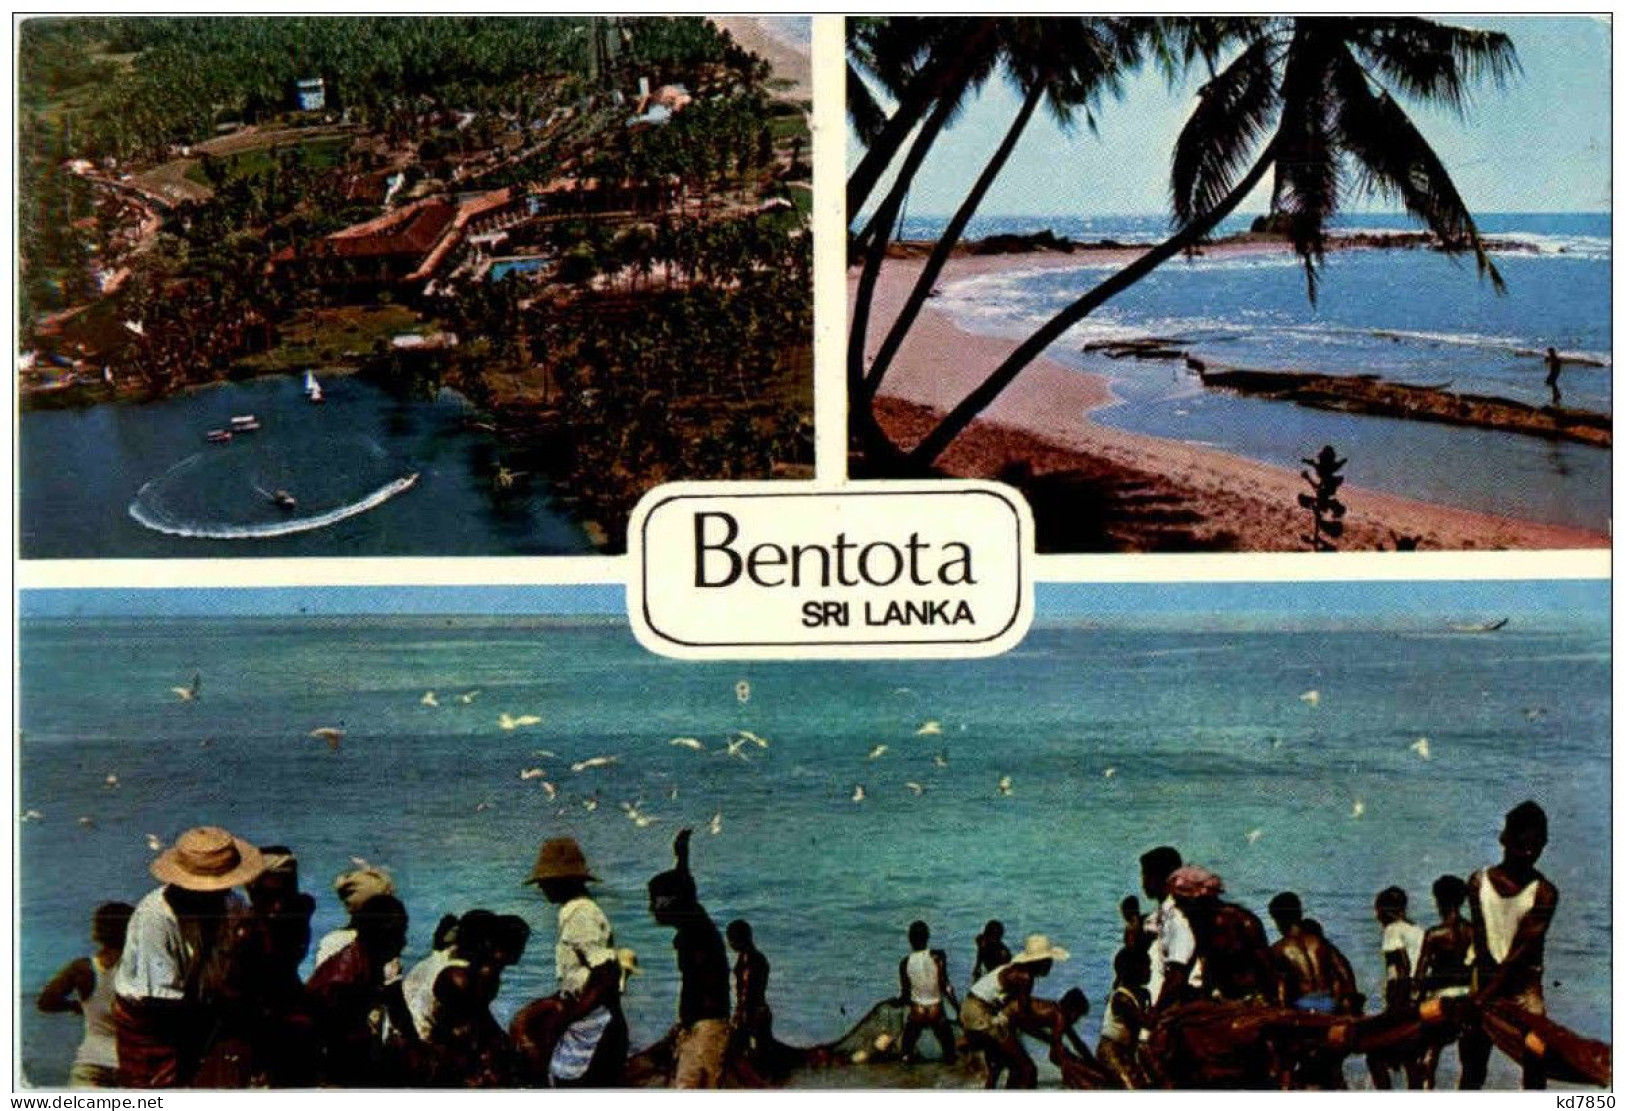 Bentota - Sri Lanka (Ceilán)